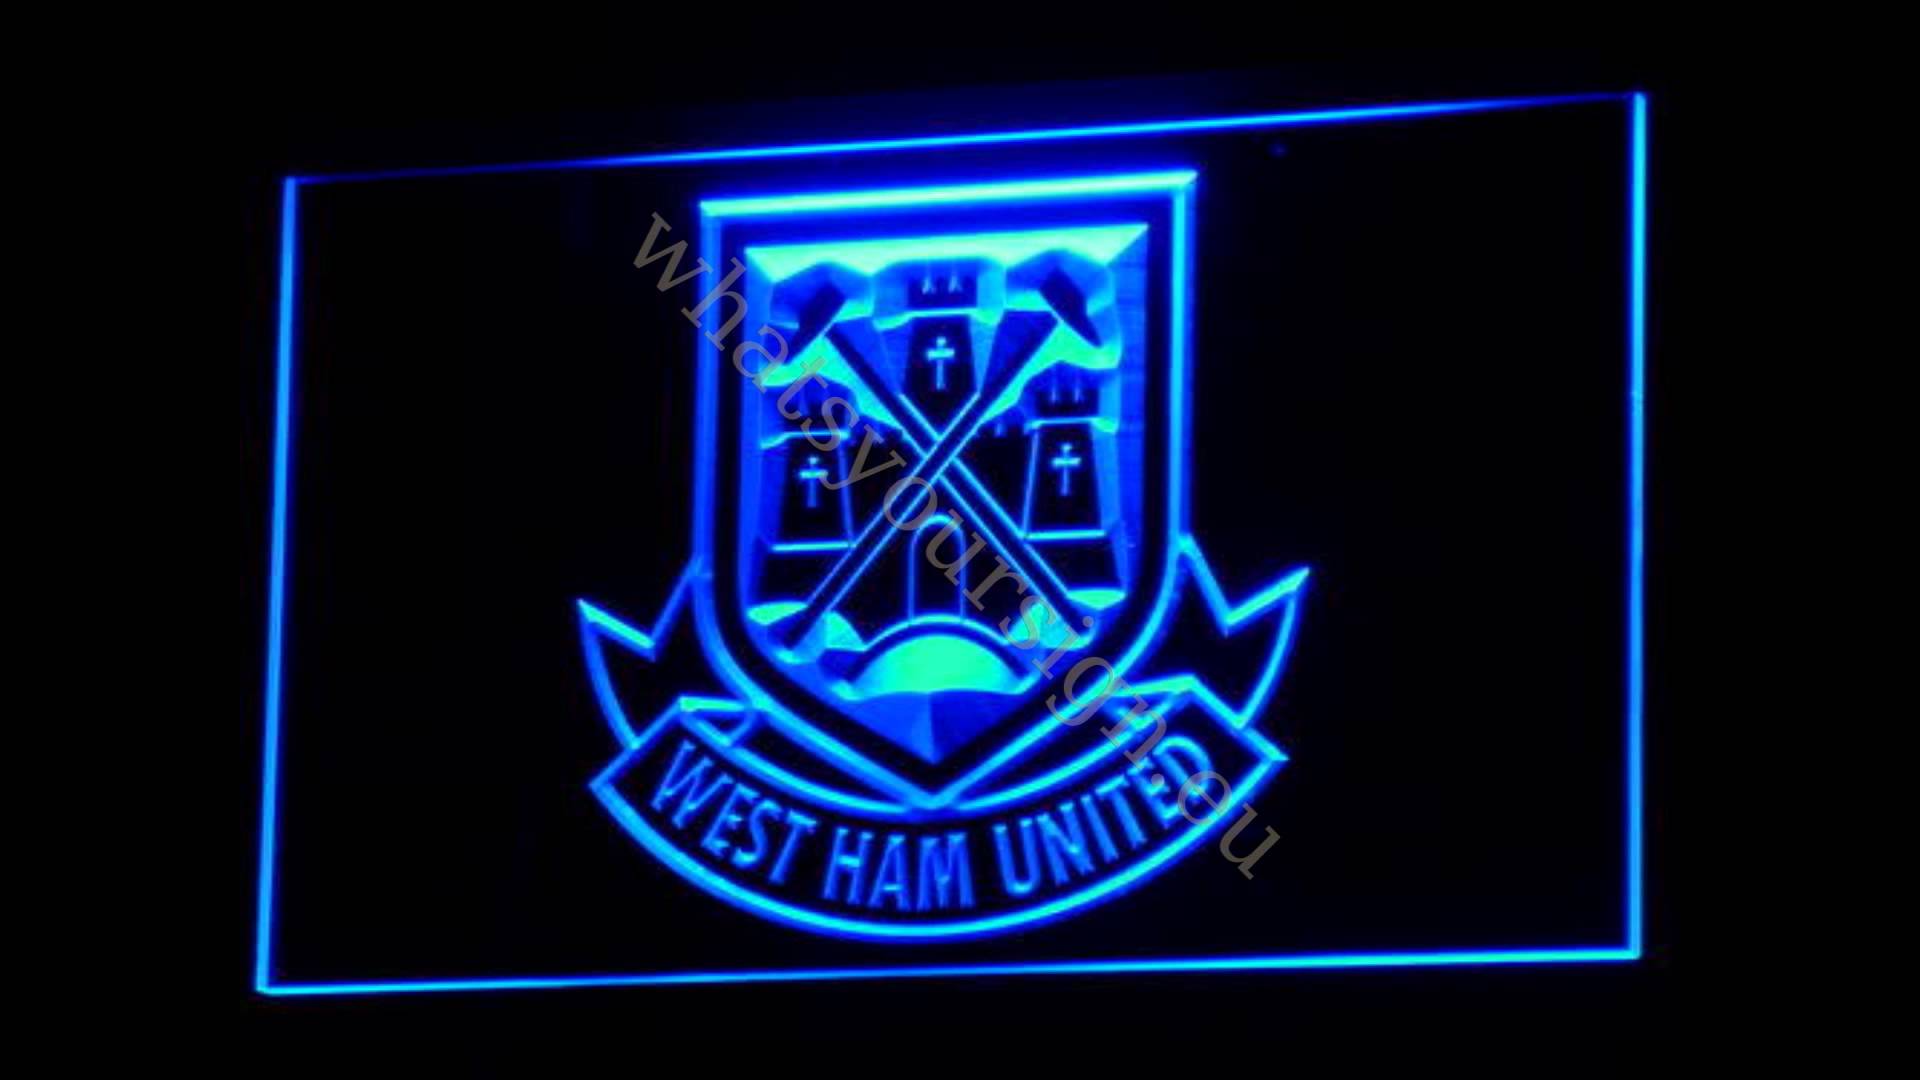 West Ham United F.C. neon light sign display